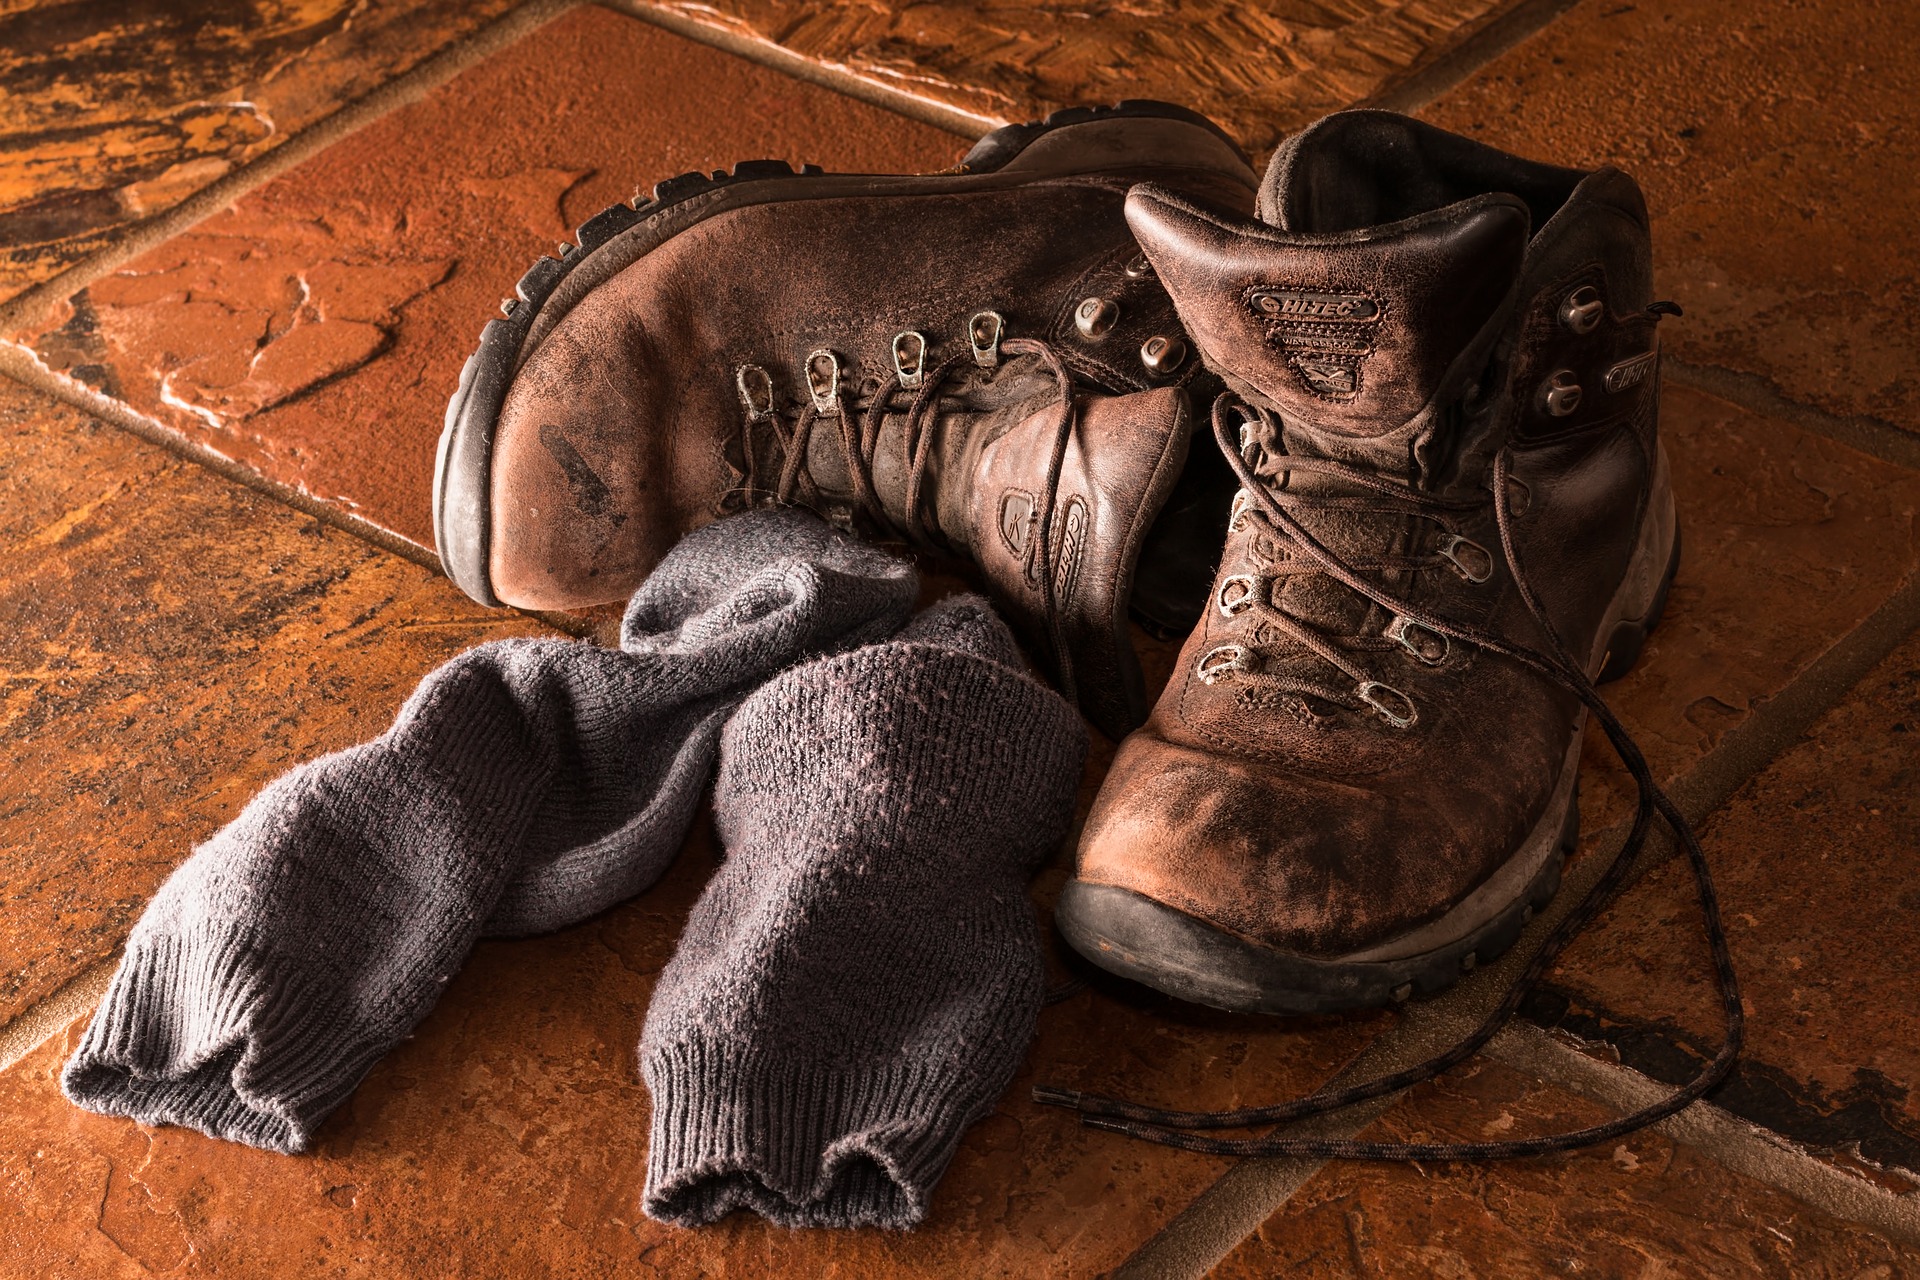 How To Break In Hiking Boots - My Feet Still Hurt